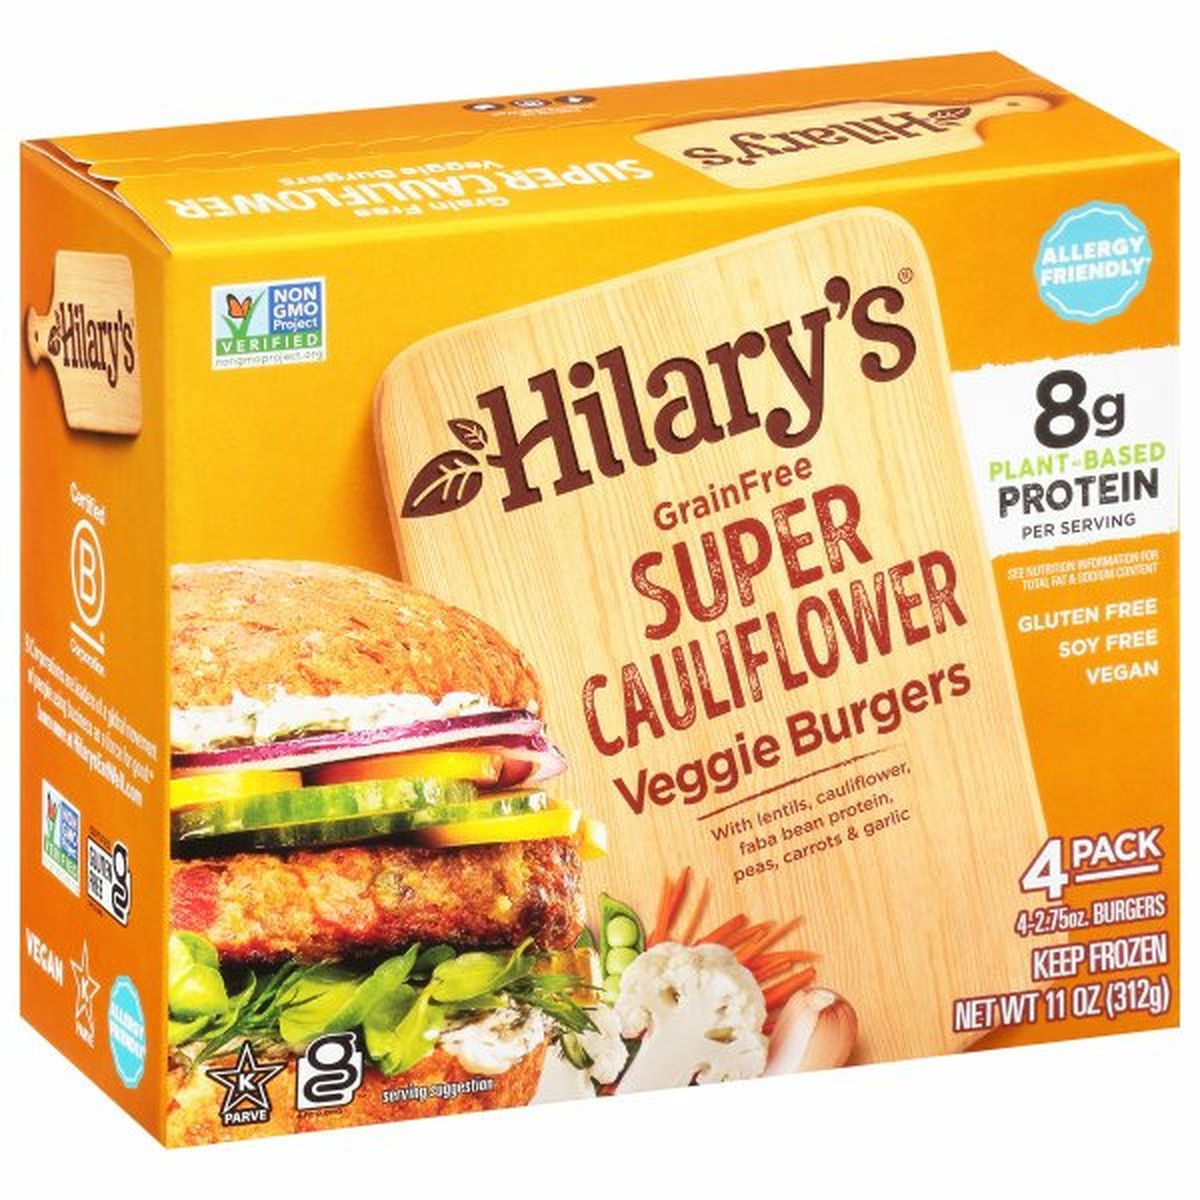 Calories in Hilary's Veggie Burgers, Grain Free, Super Cauliflower, 4 Pack